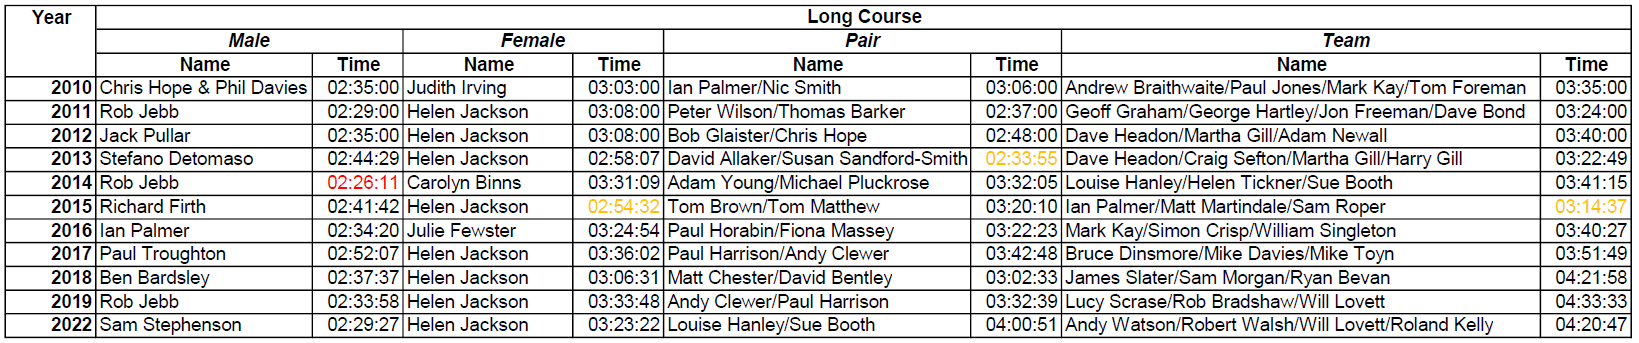 Long Course Honours Board